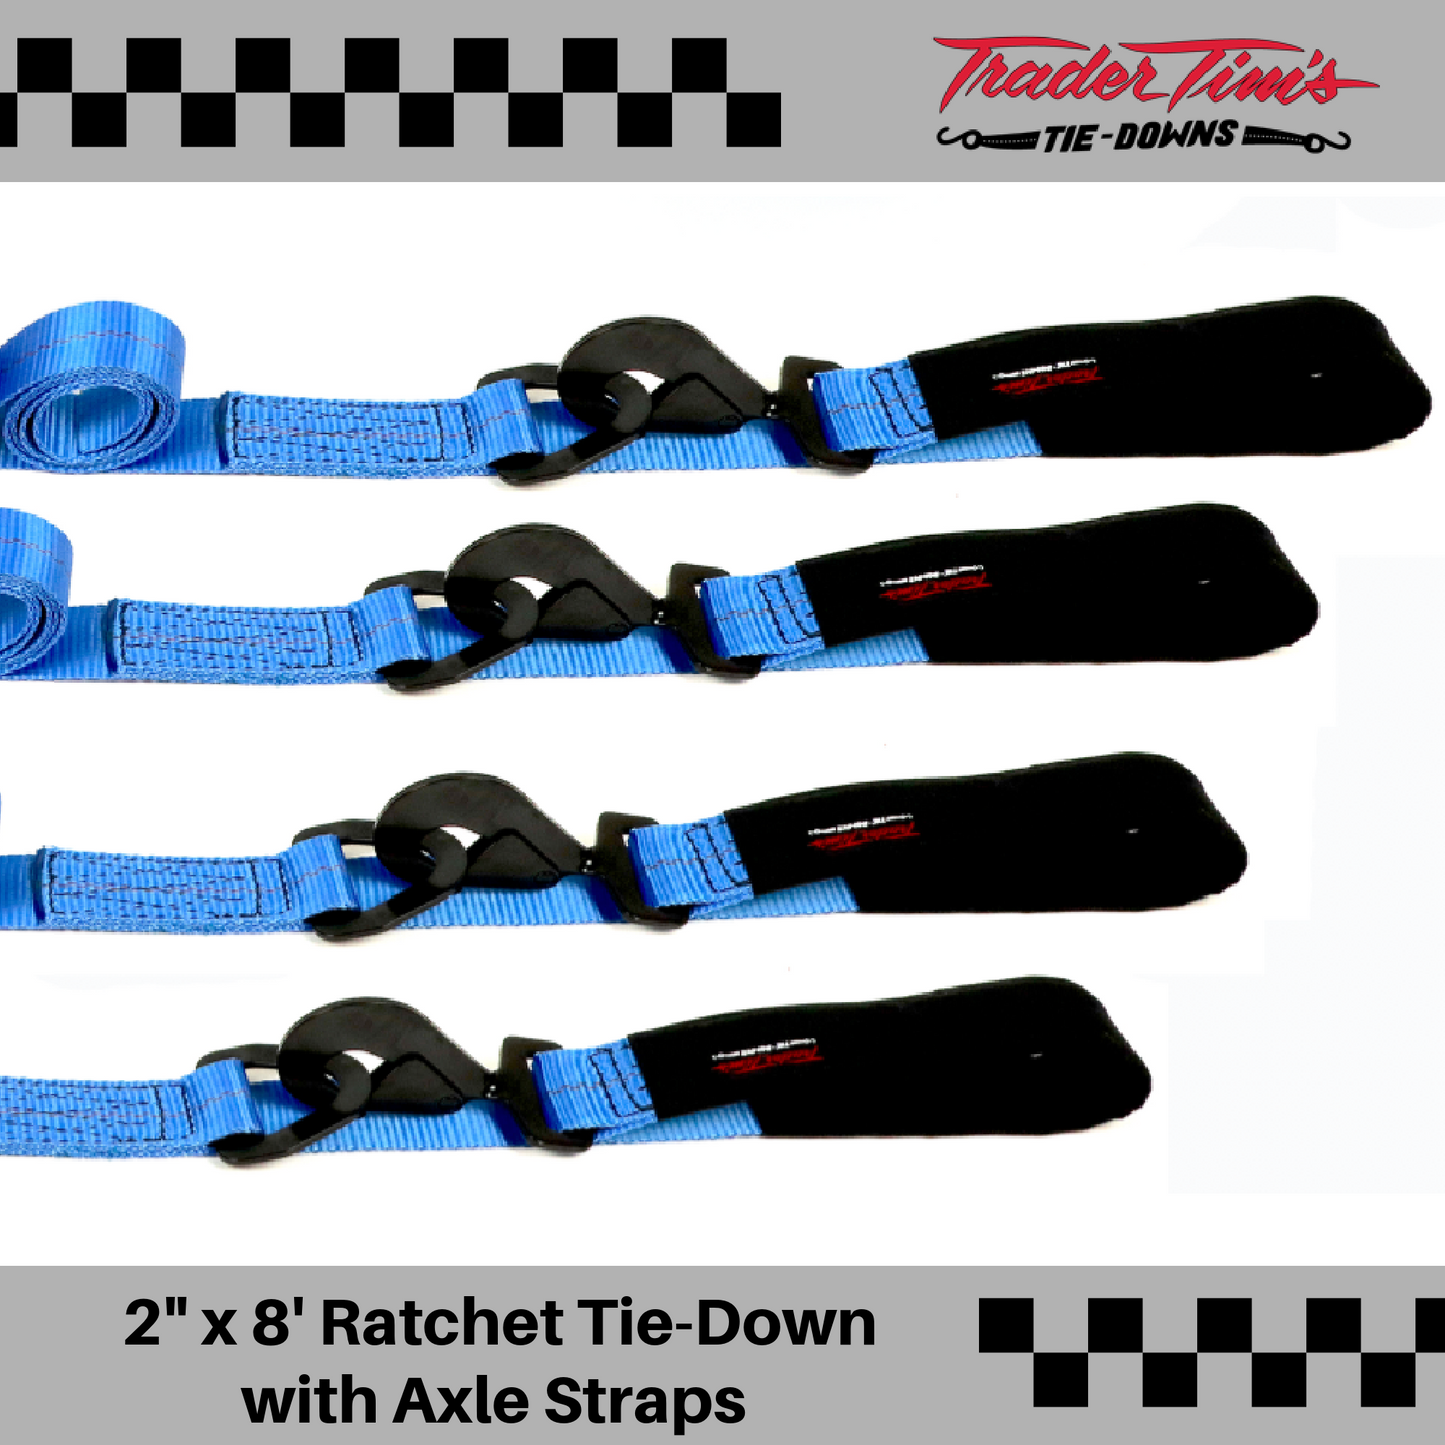 9 Piece  2" x 8' Ratchet Tie-Down with Axle Straps Kit - 4 Color Options